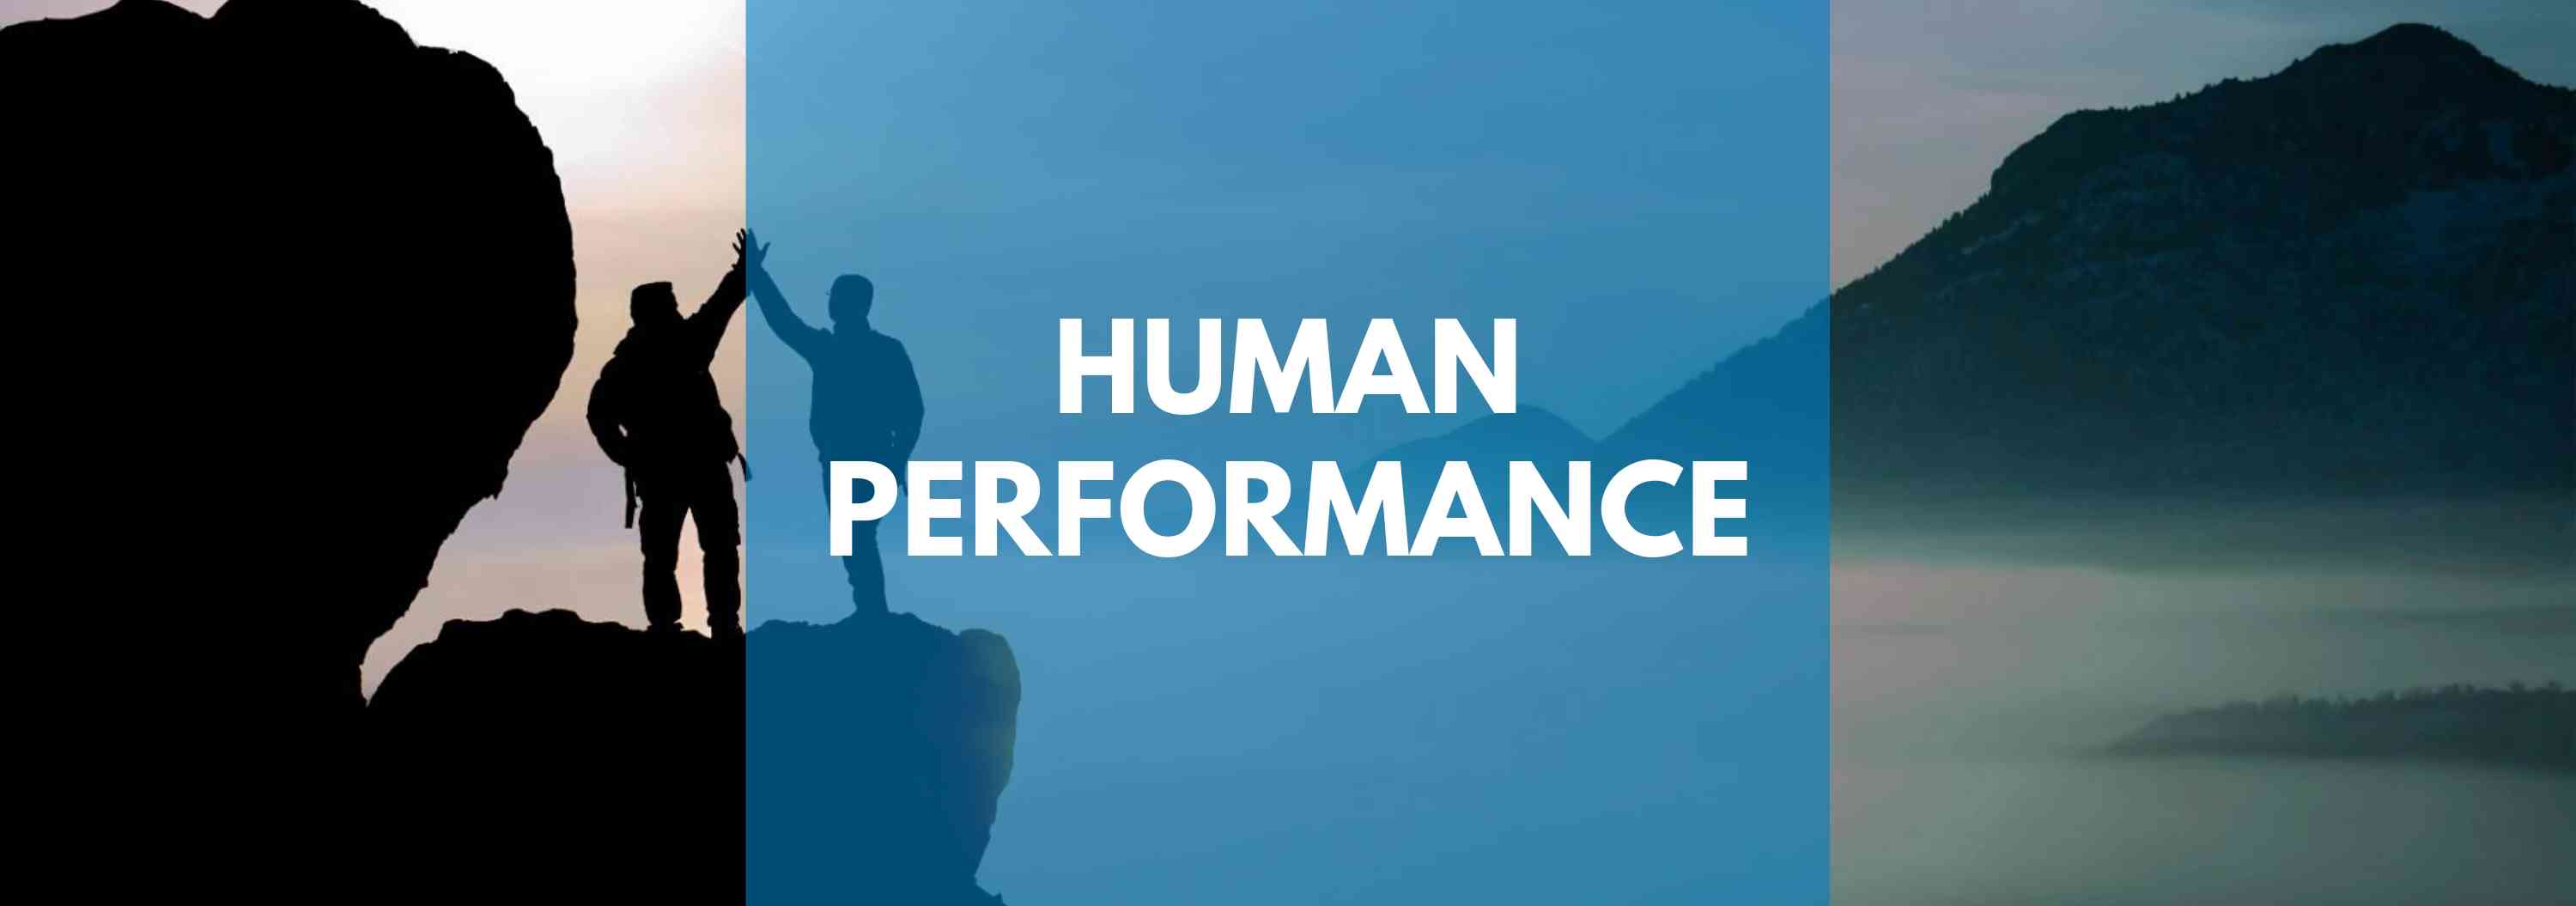 Human Performance Banner